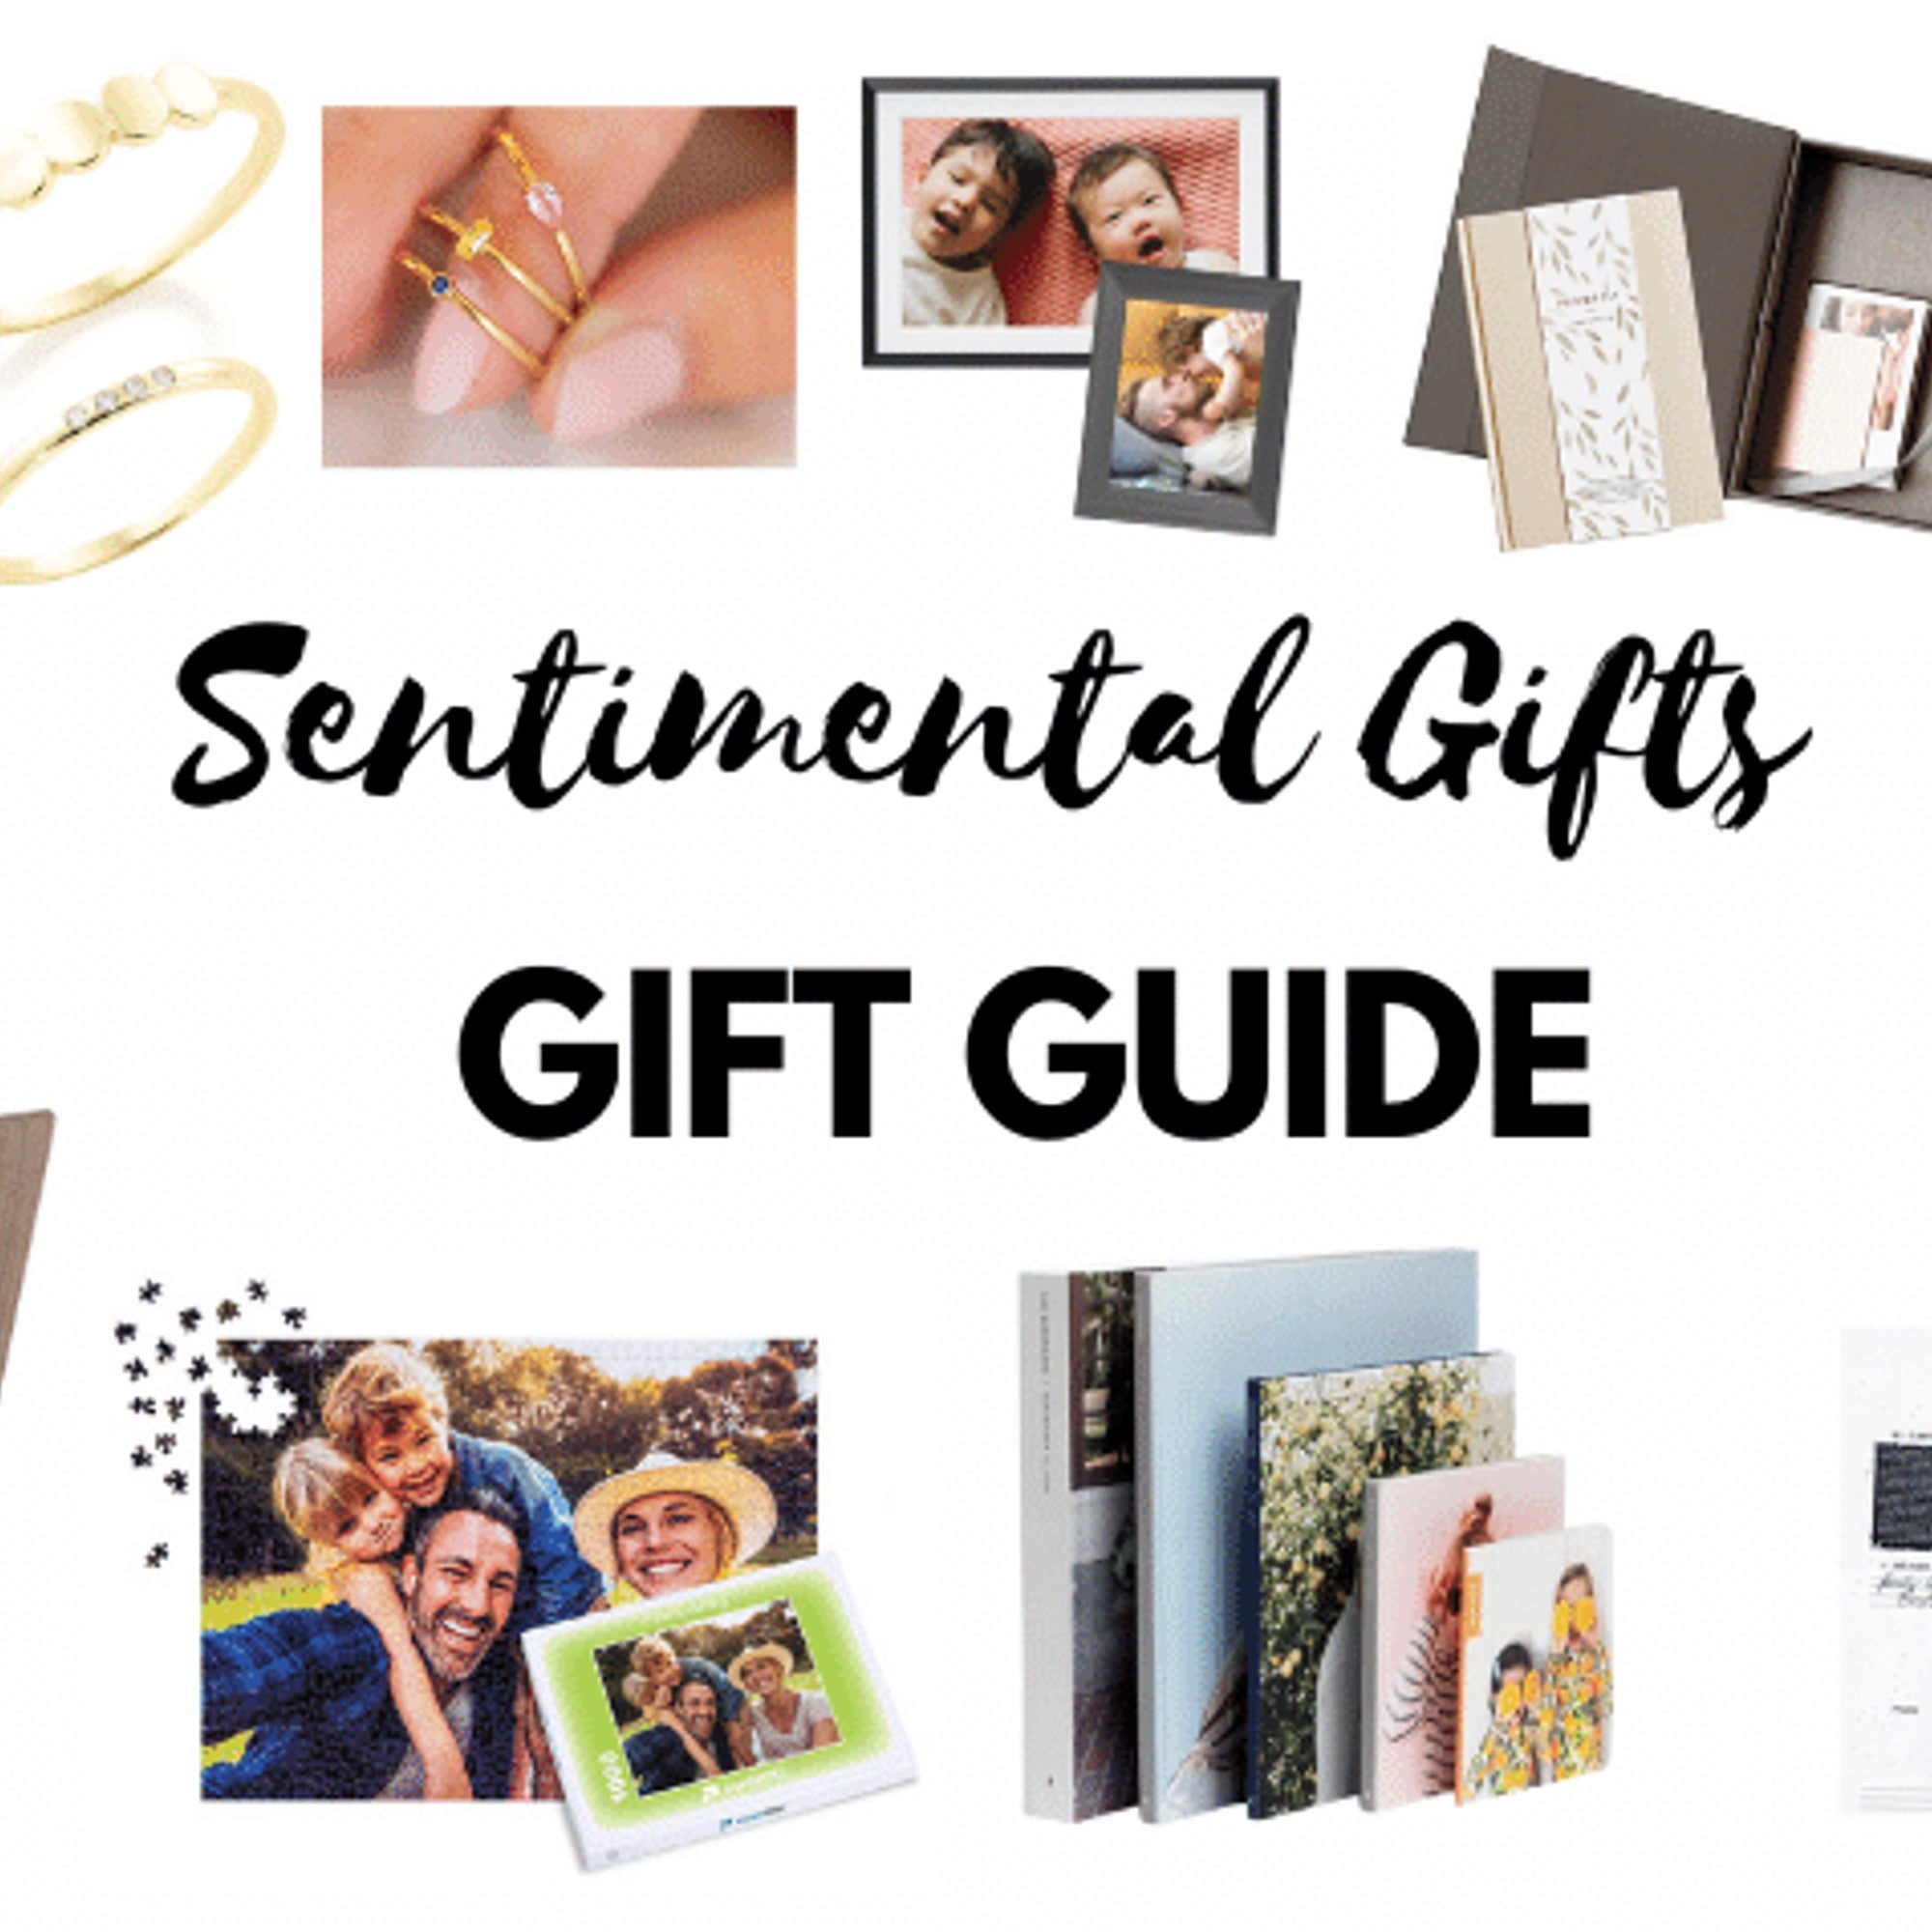 5 Sentimental Gift Ideas